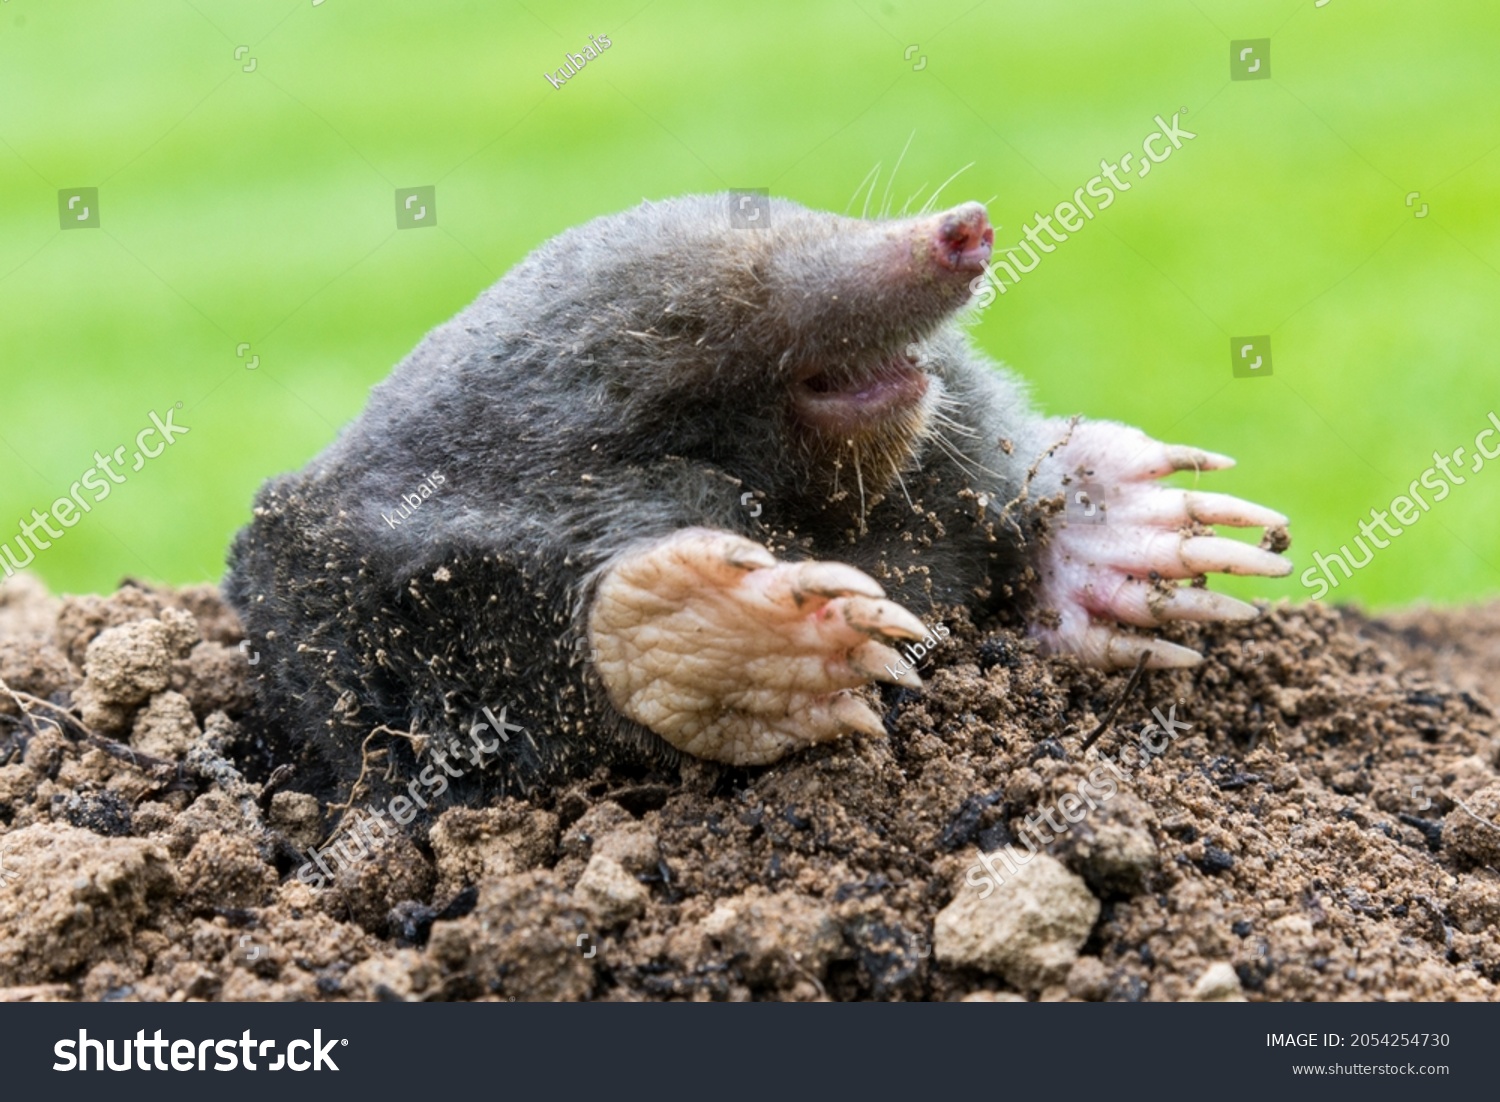 Mole, Talpa europaea, making mole hill and damaging beautiful lawn and flower garden. #2054254730